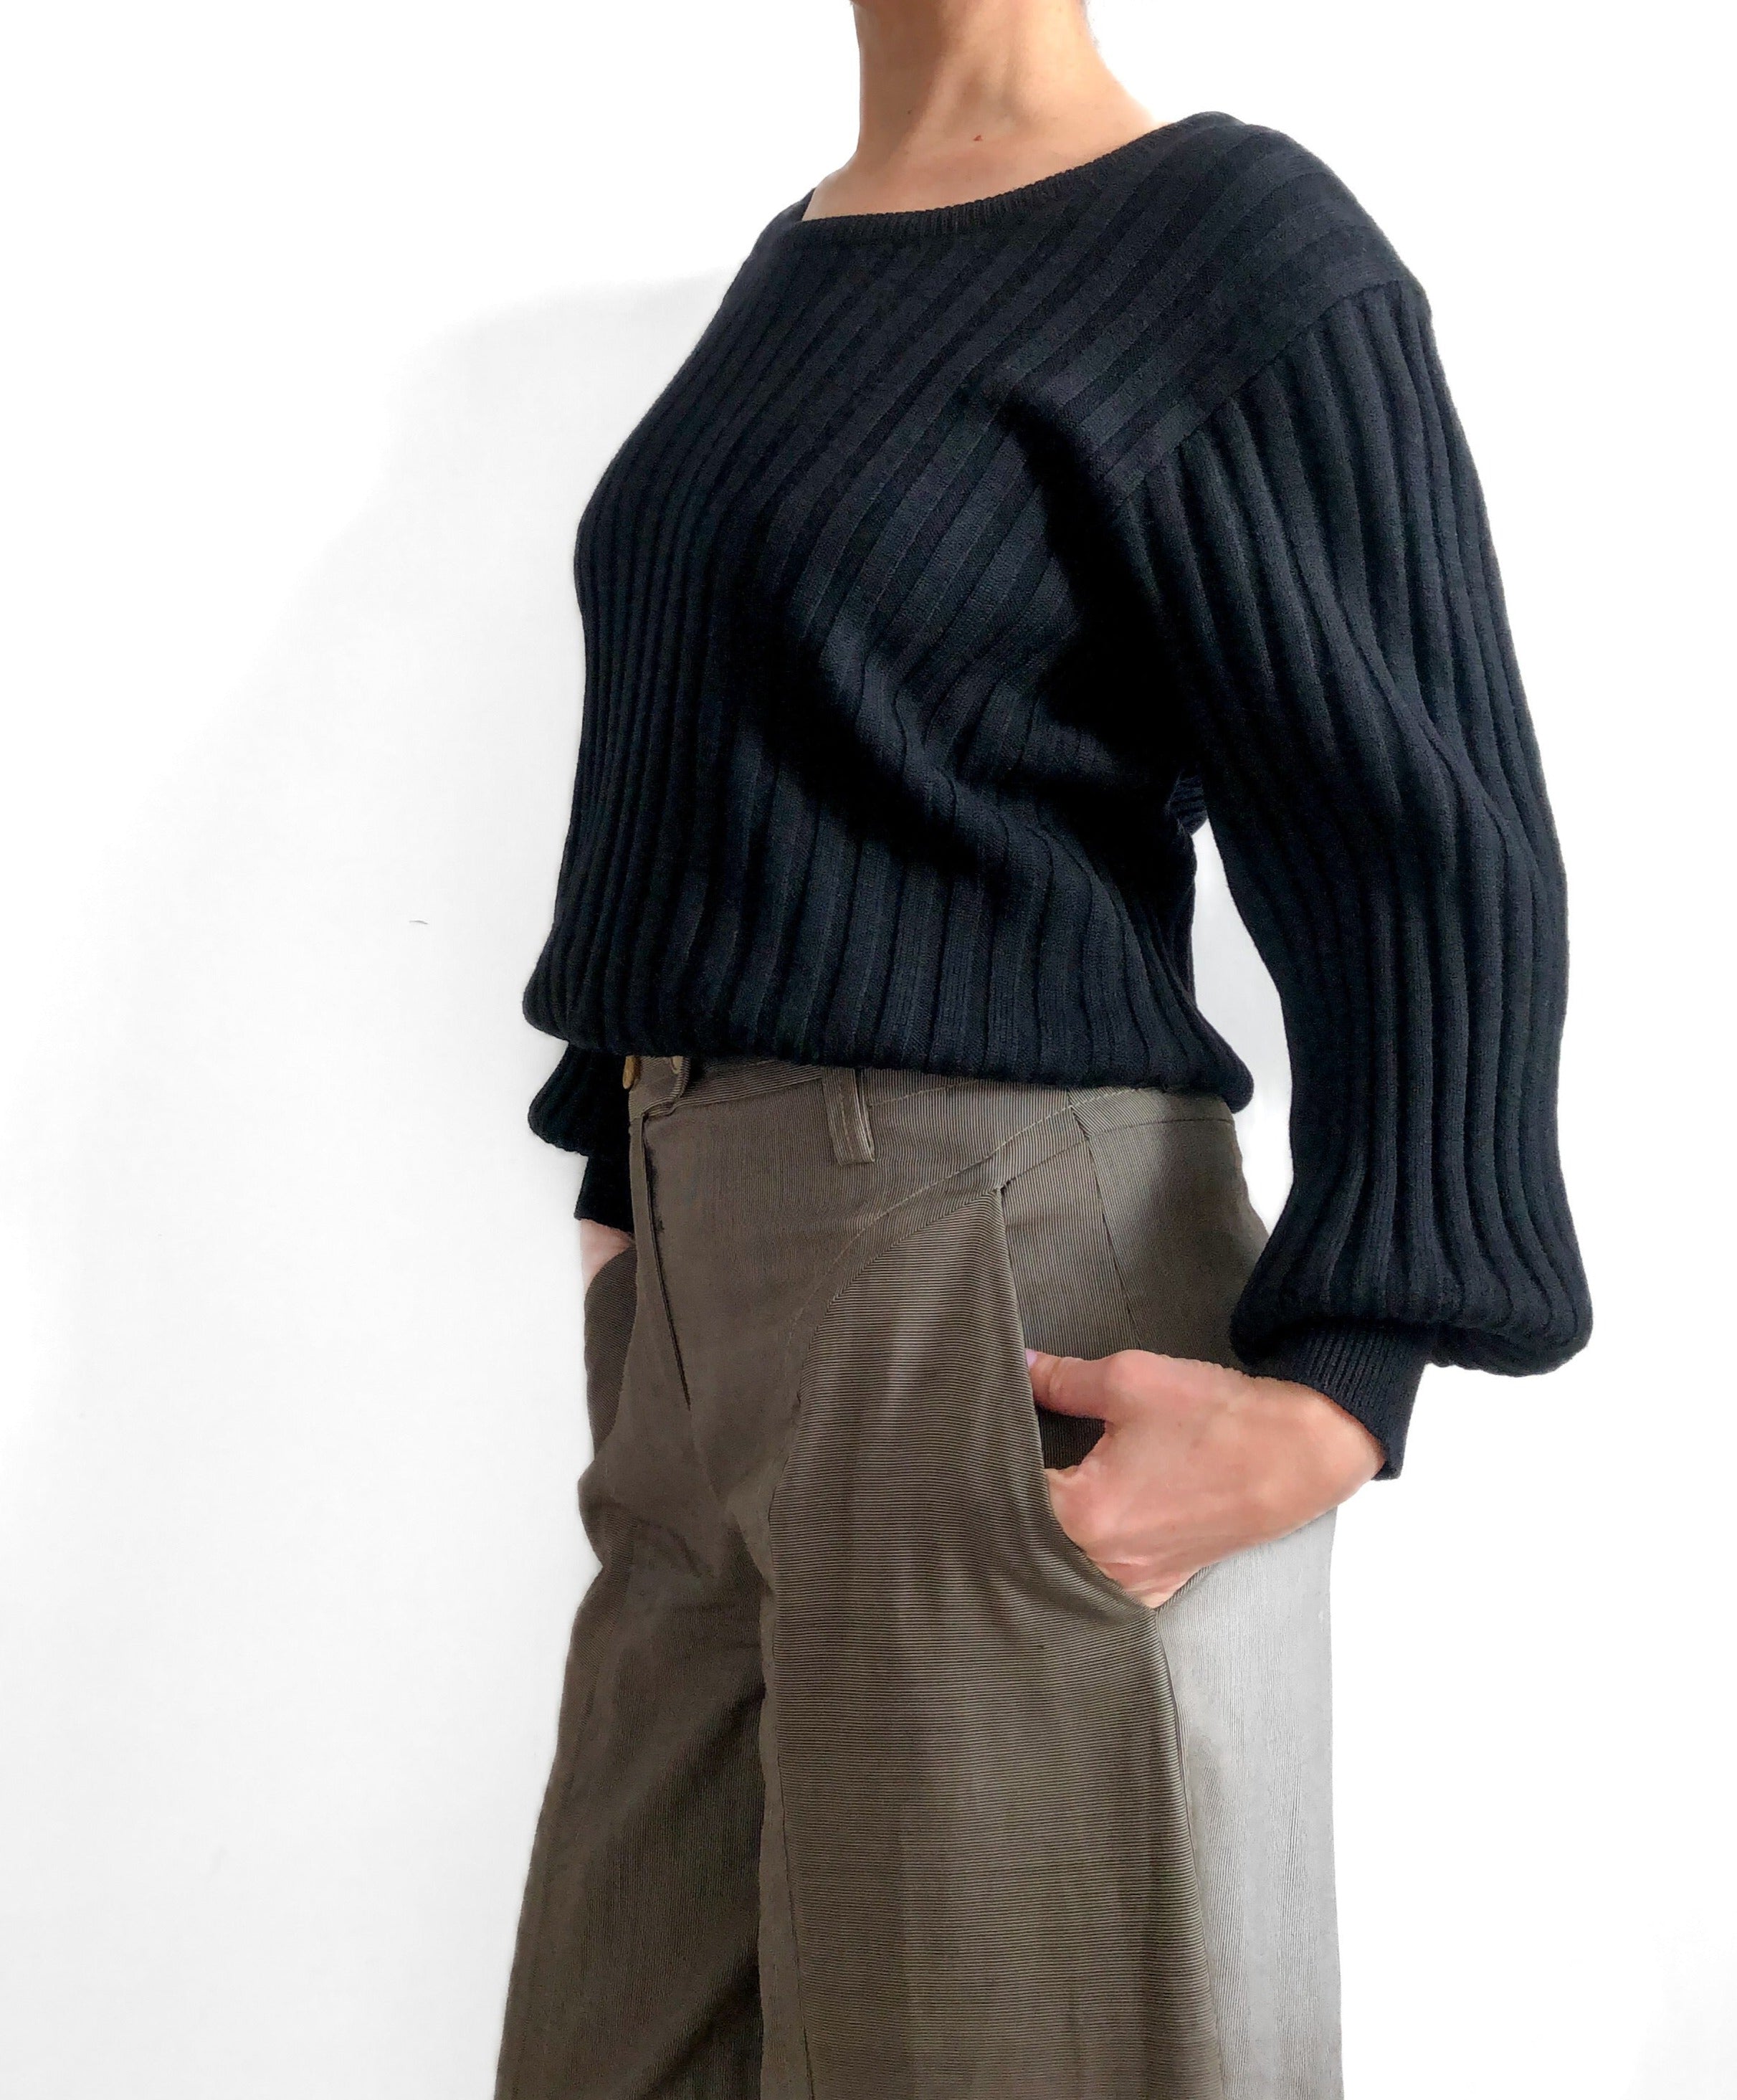 Holt Renfrew Balloon Sleeve Sweater, Size Large Wide Ribbed Black Wool Luxury Sweater,